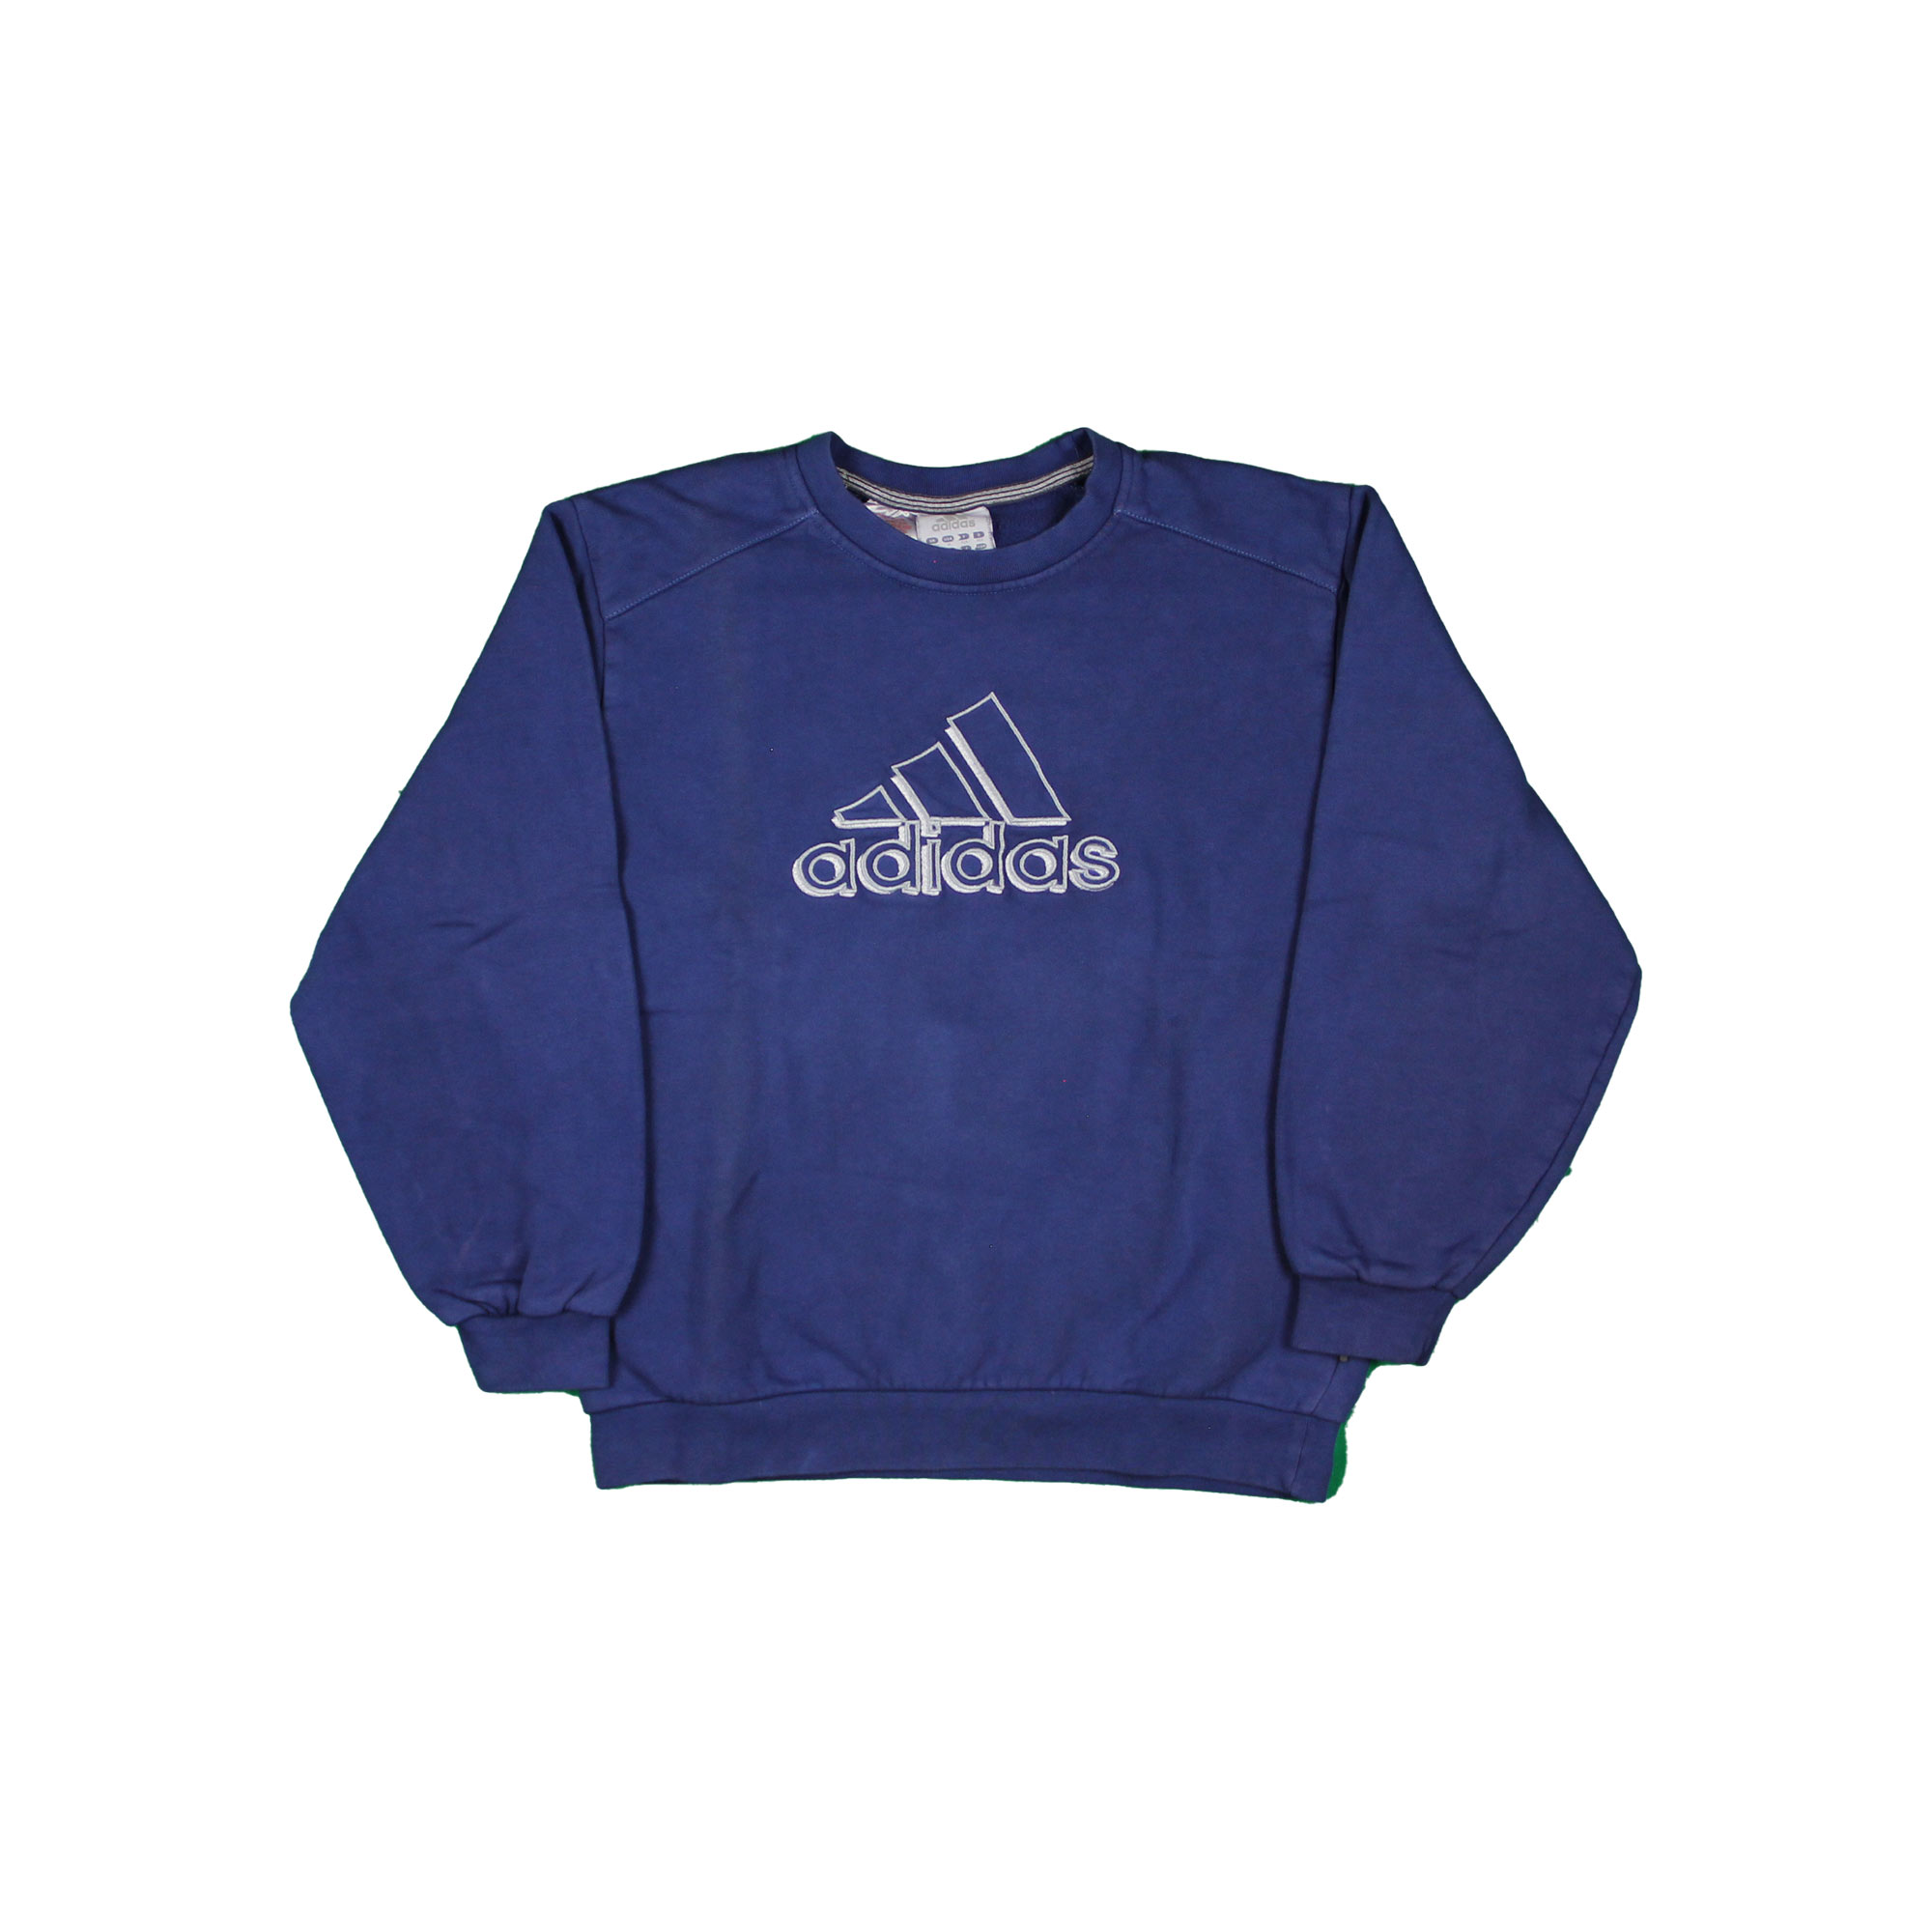 Adidas Embroidered Sweatshirt - XS